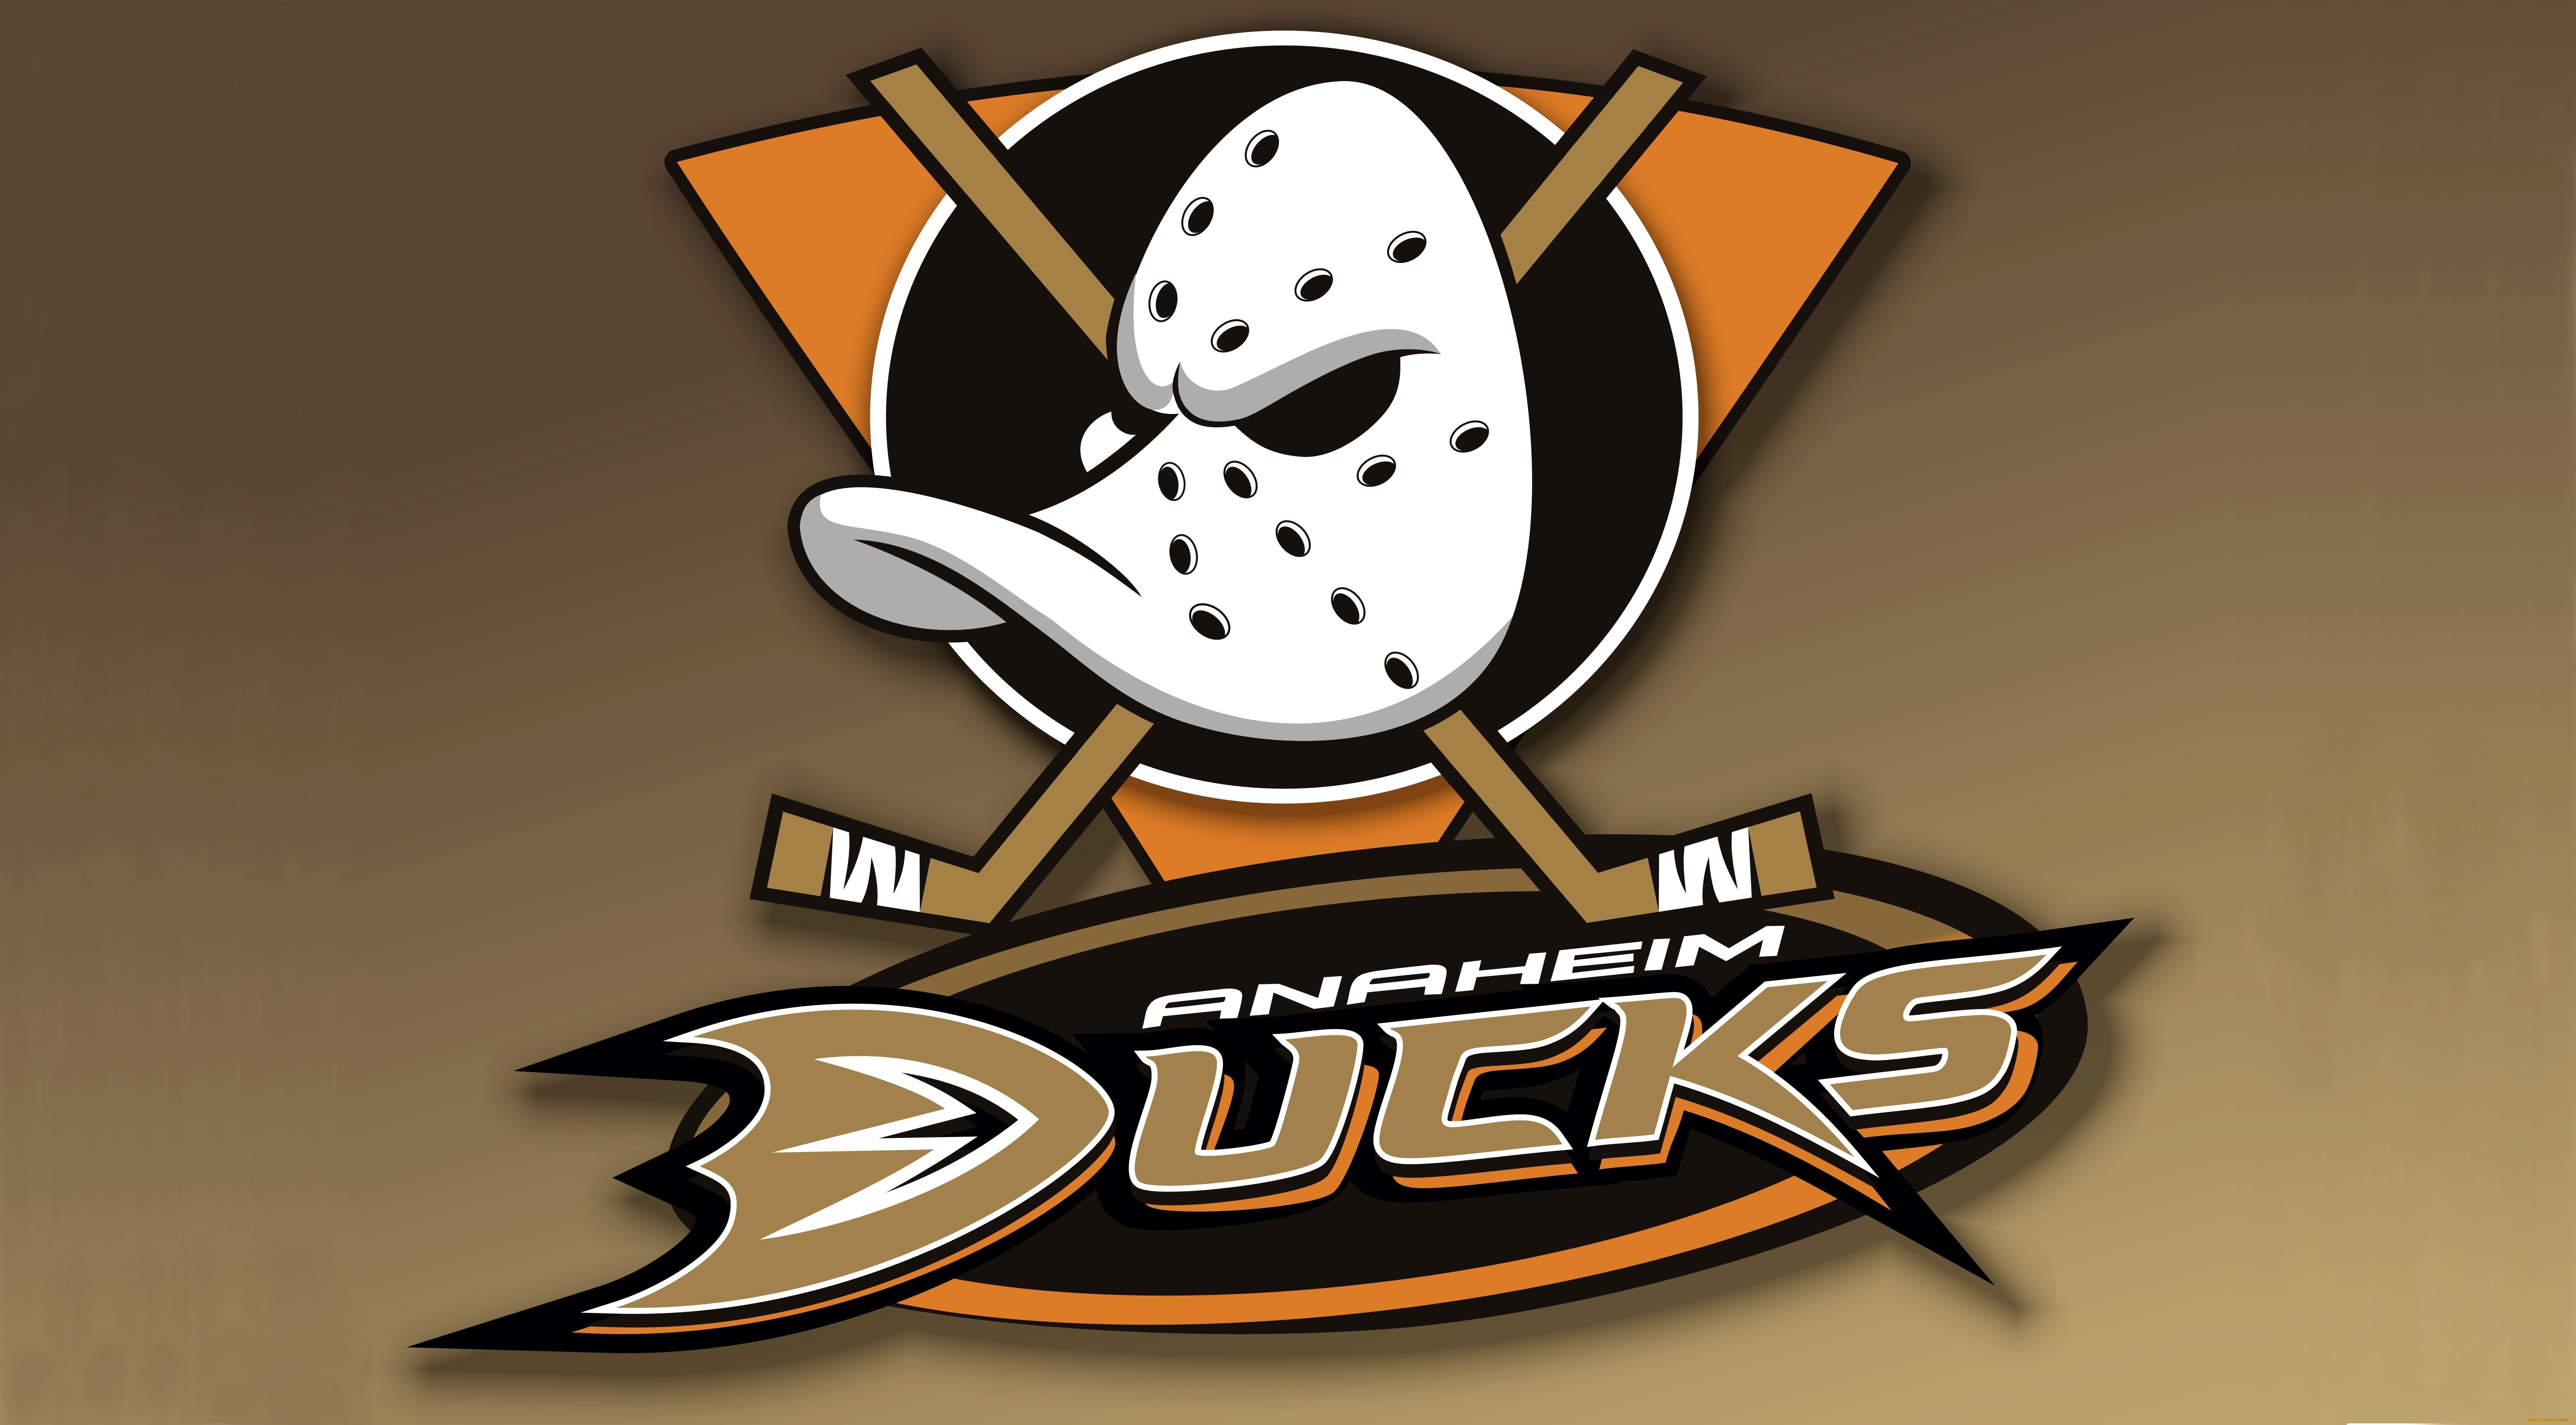 Обои на телефон хк. Хоккейная команда NHL логотипы. Хоккейная команда Анахайм Дакс. Команда Anaheim Ducks хоккейная. Команда НХЛ Дакс.